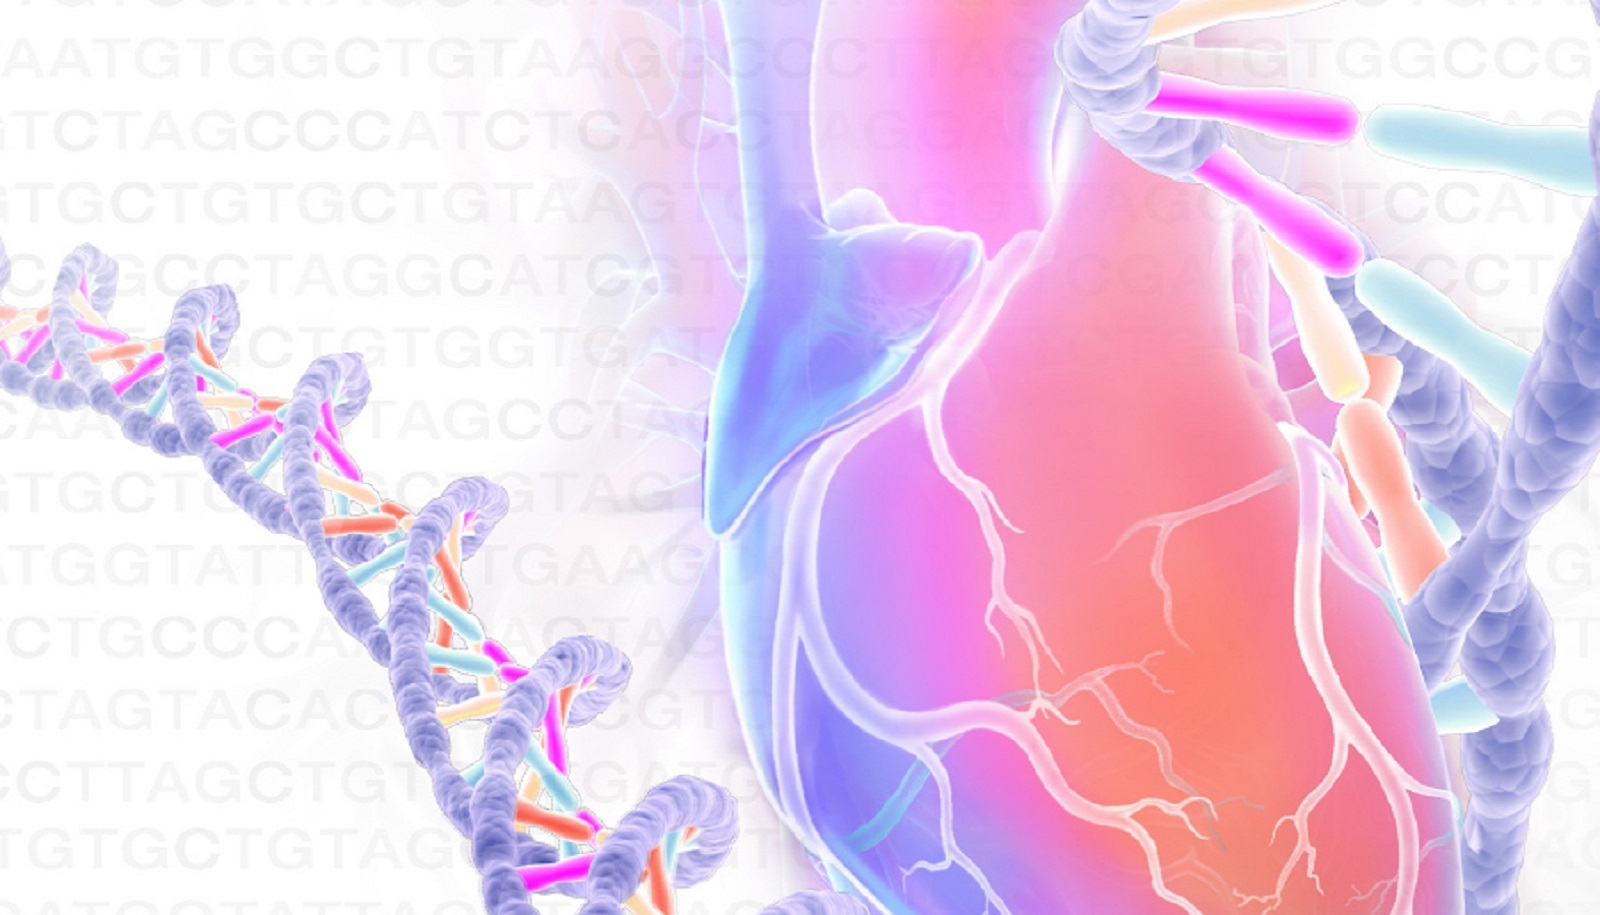 The Genetics of Heart & Vascular Disease